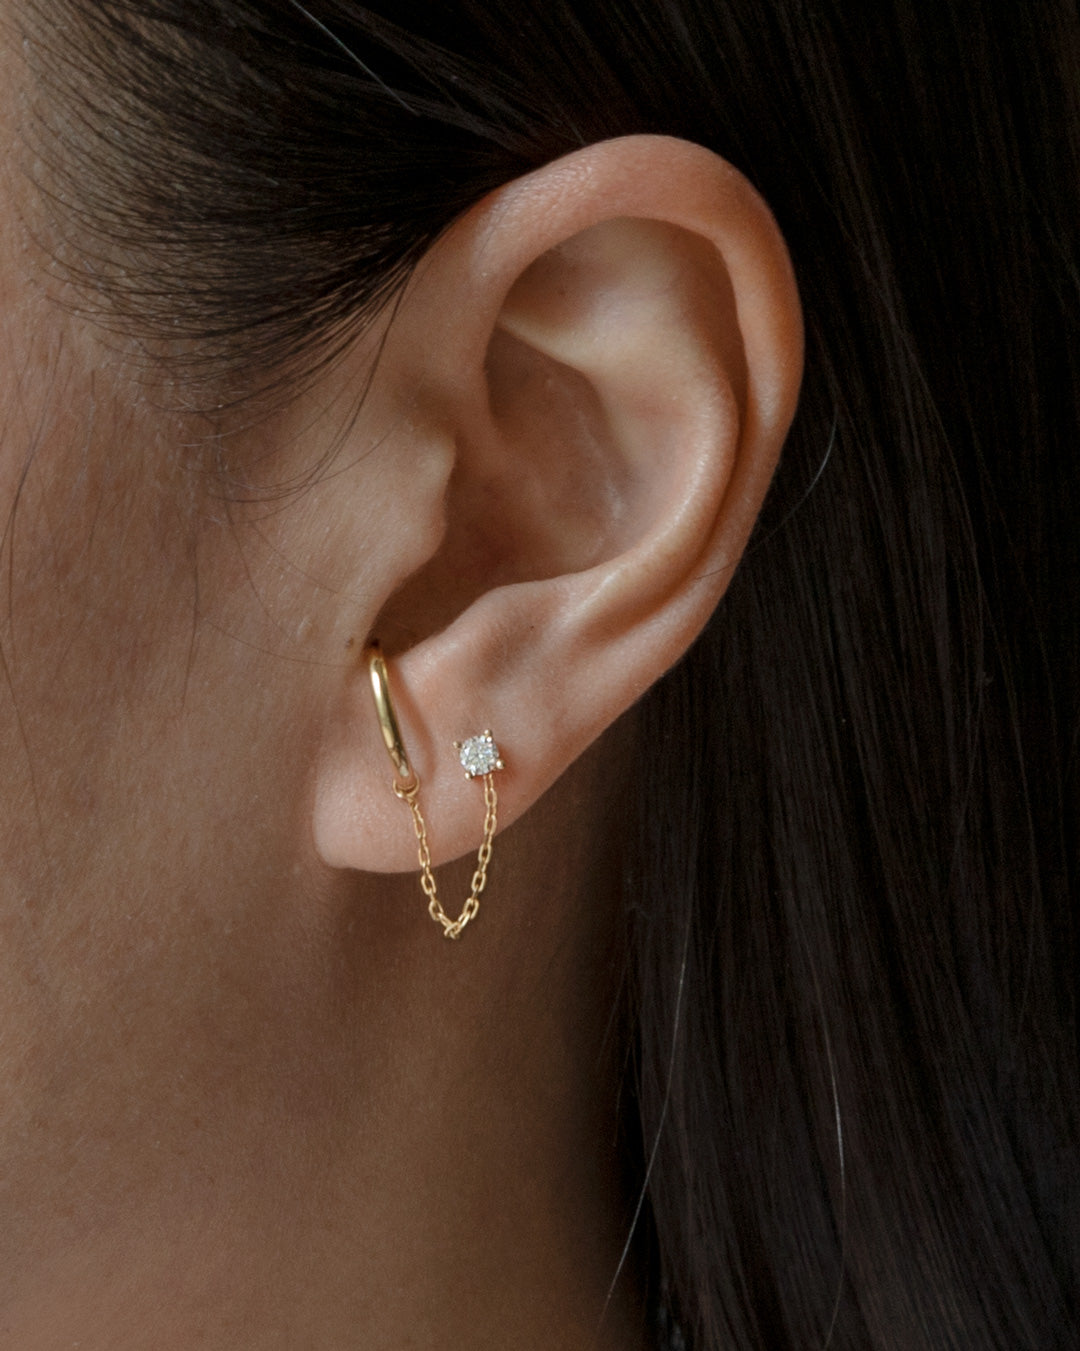 Rainbow Moonstone Earring with Fringed Ear Jacket | Alex Lozier Jewelry